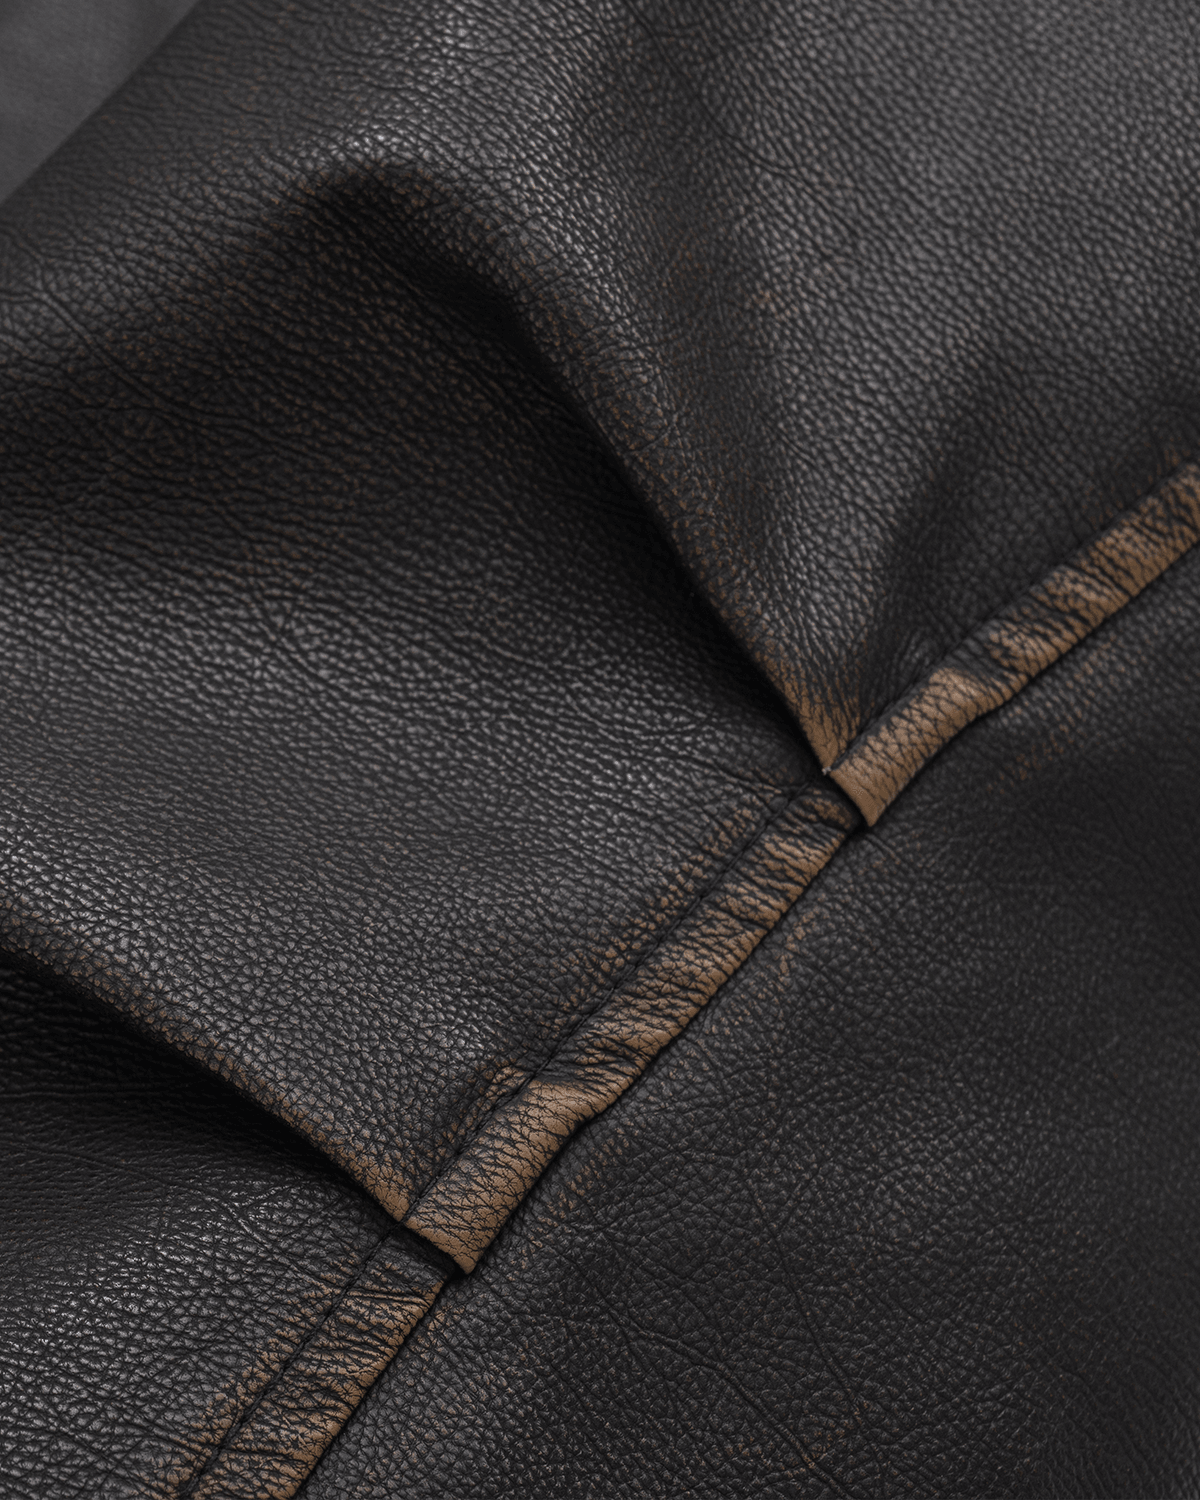 TAKA ORIGINAL LIMITED - TAKA Original Faded flame Leather Jacket